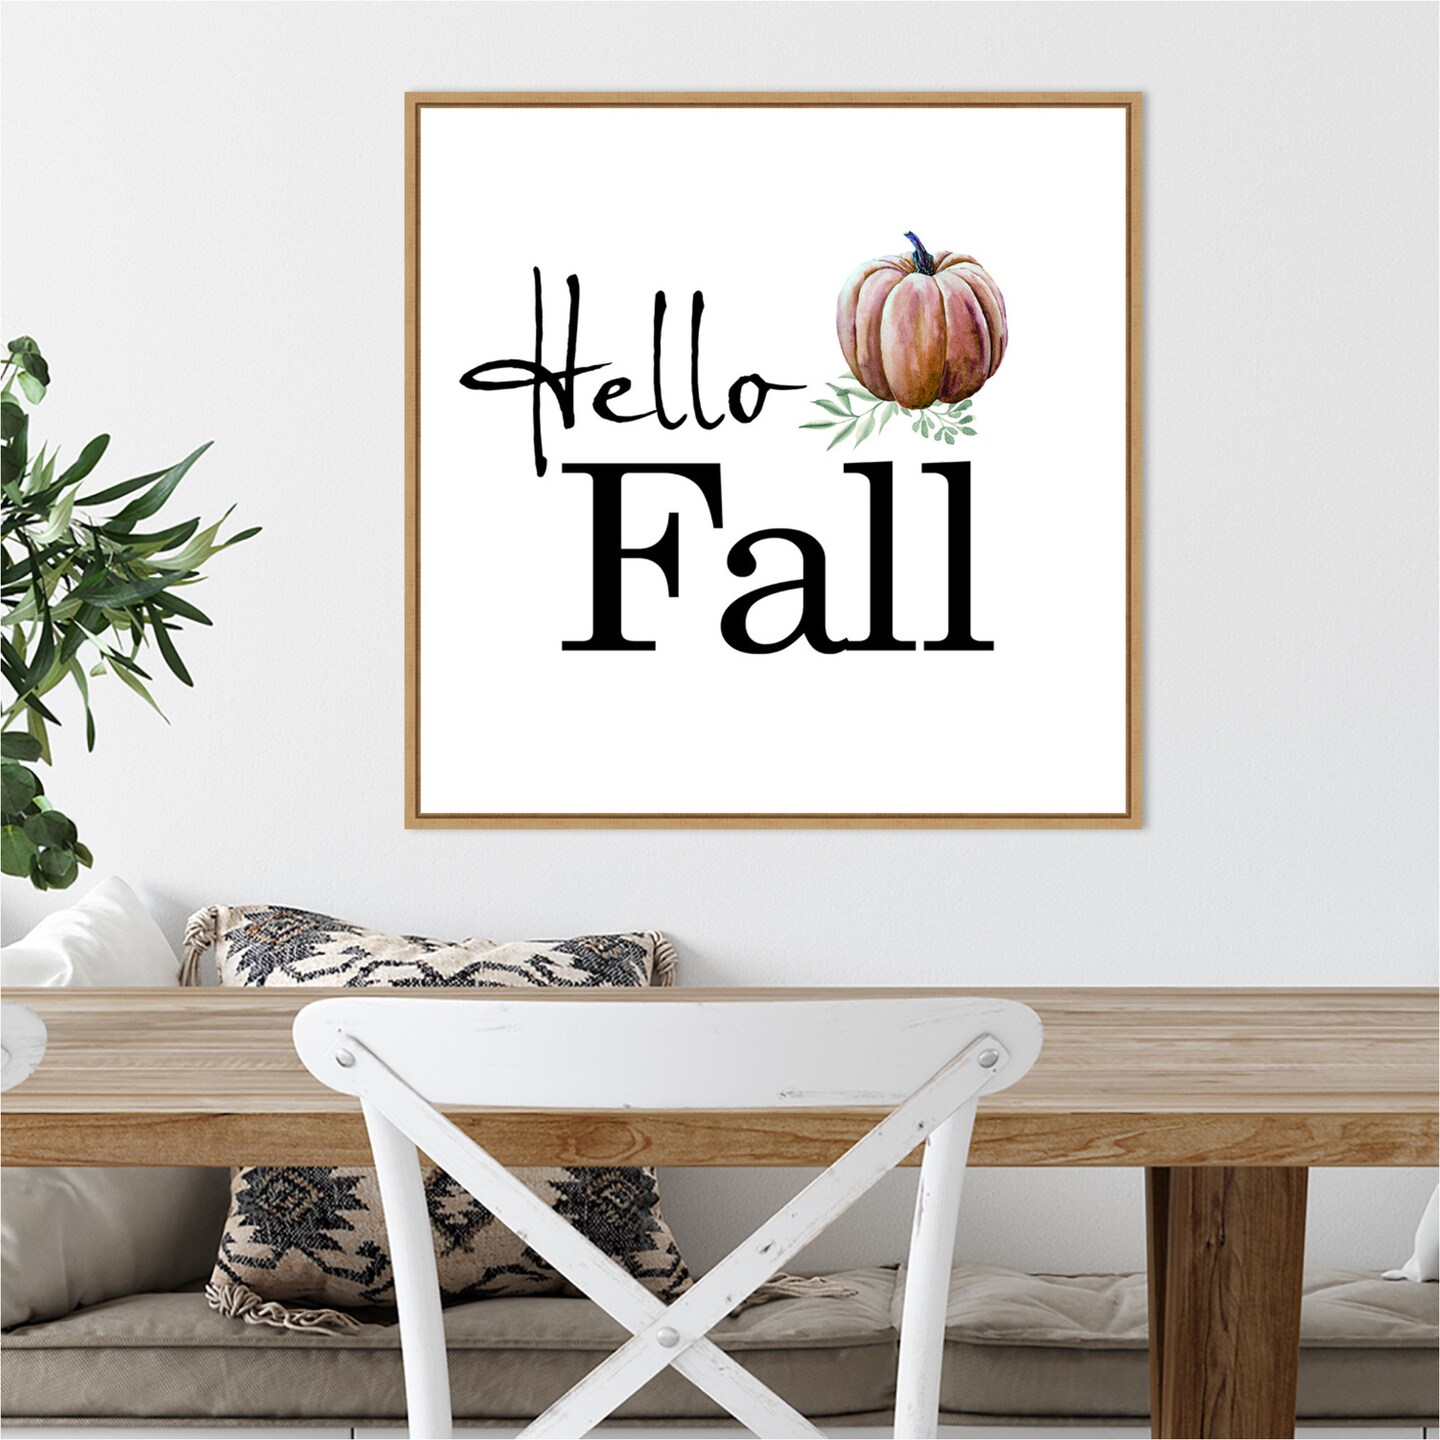 Hello Fall Pumpkin by Amanti Art Portfolio 22-in. W x 22-in. H. Canvas Wall Art Print Framed in Natural